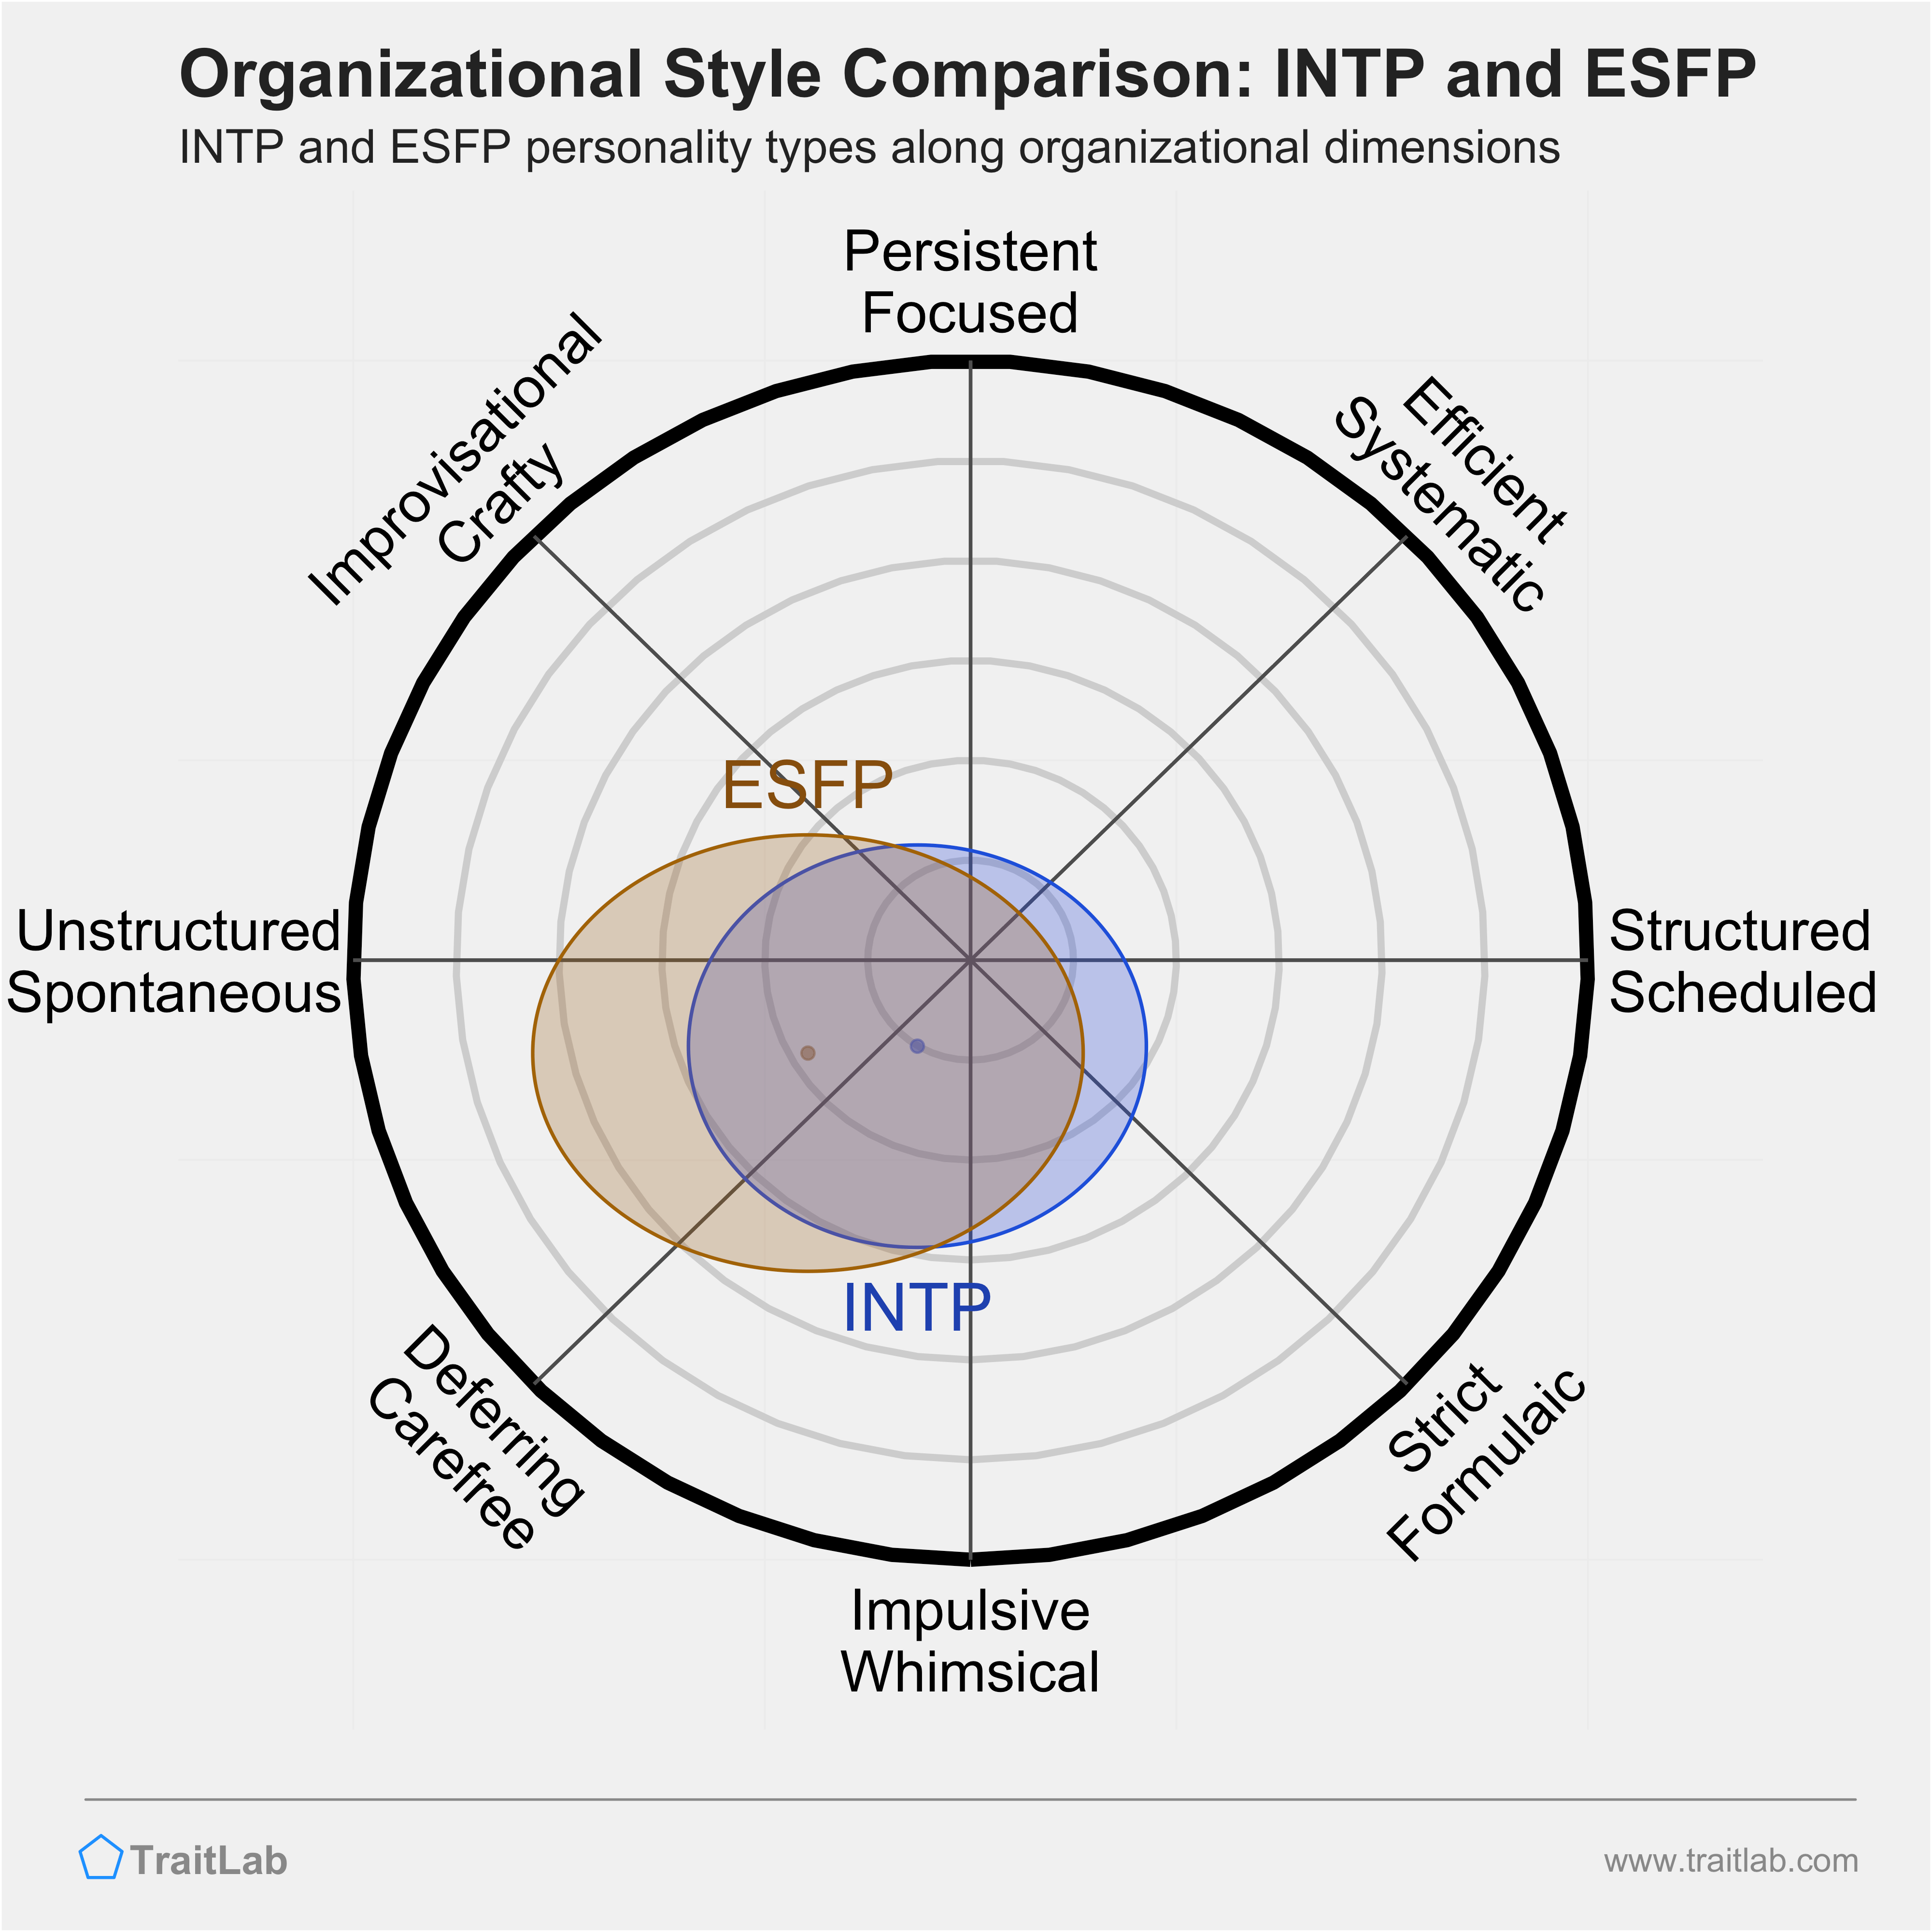 INTP and ESFP comparison across organizational dimensions